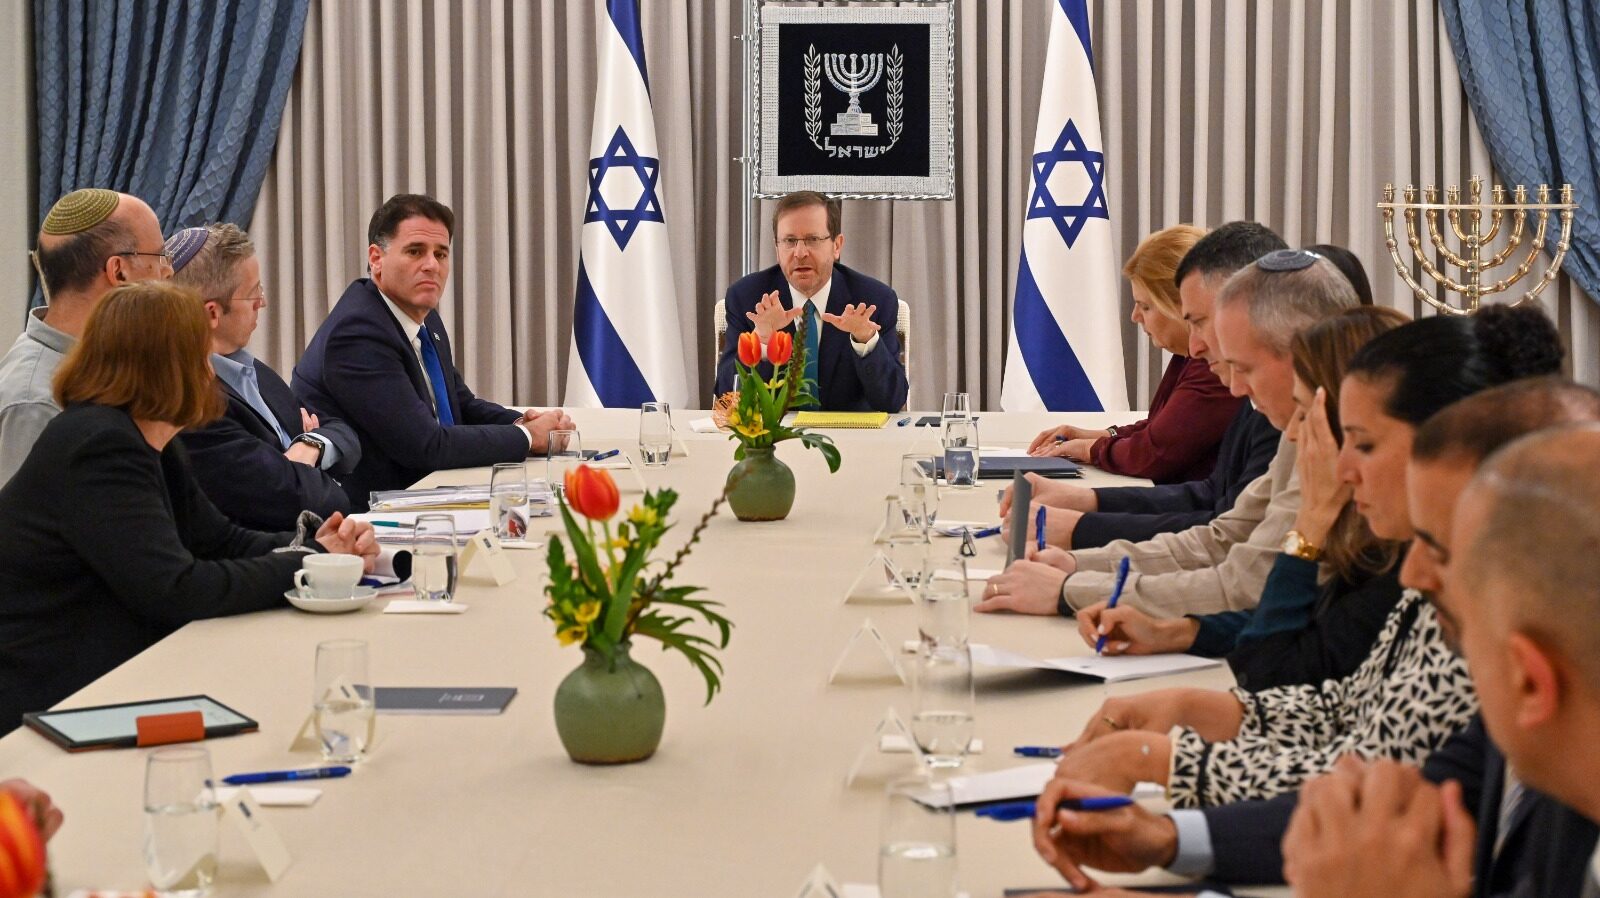 Israel’s President Hosts 1st Round of Talks on Judicial Reform